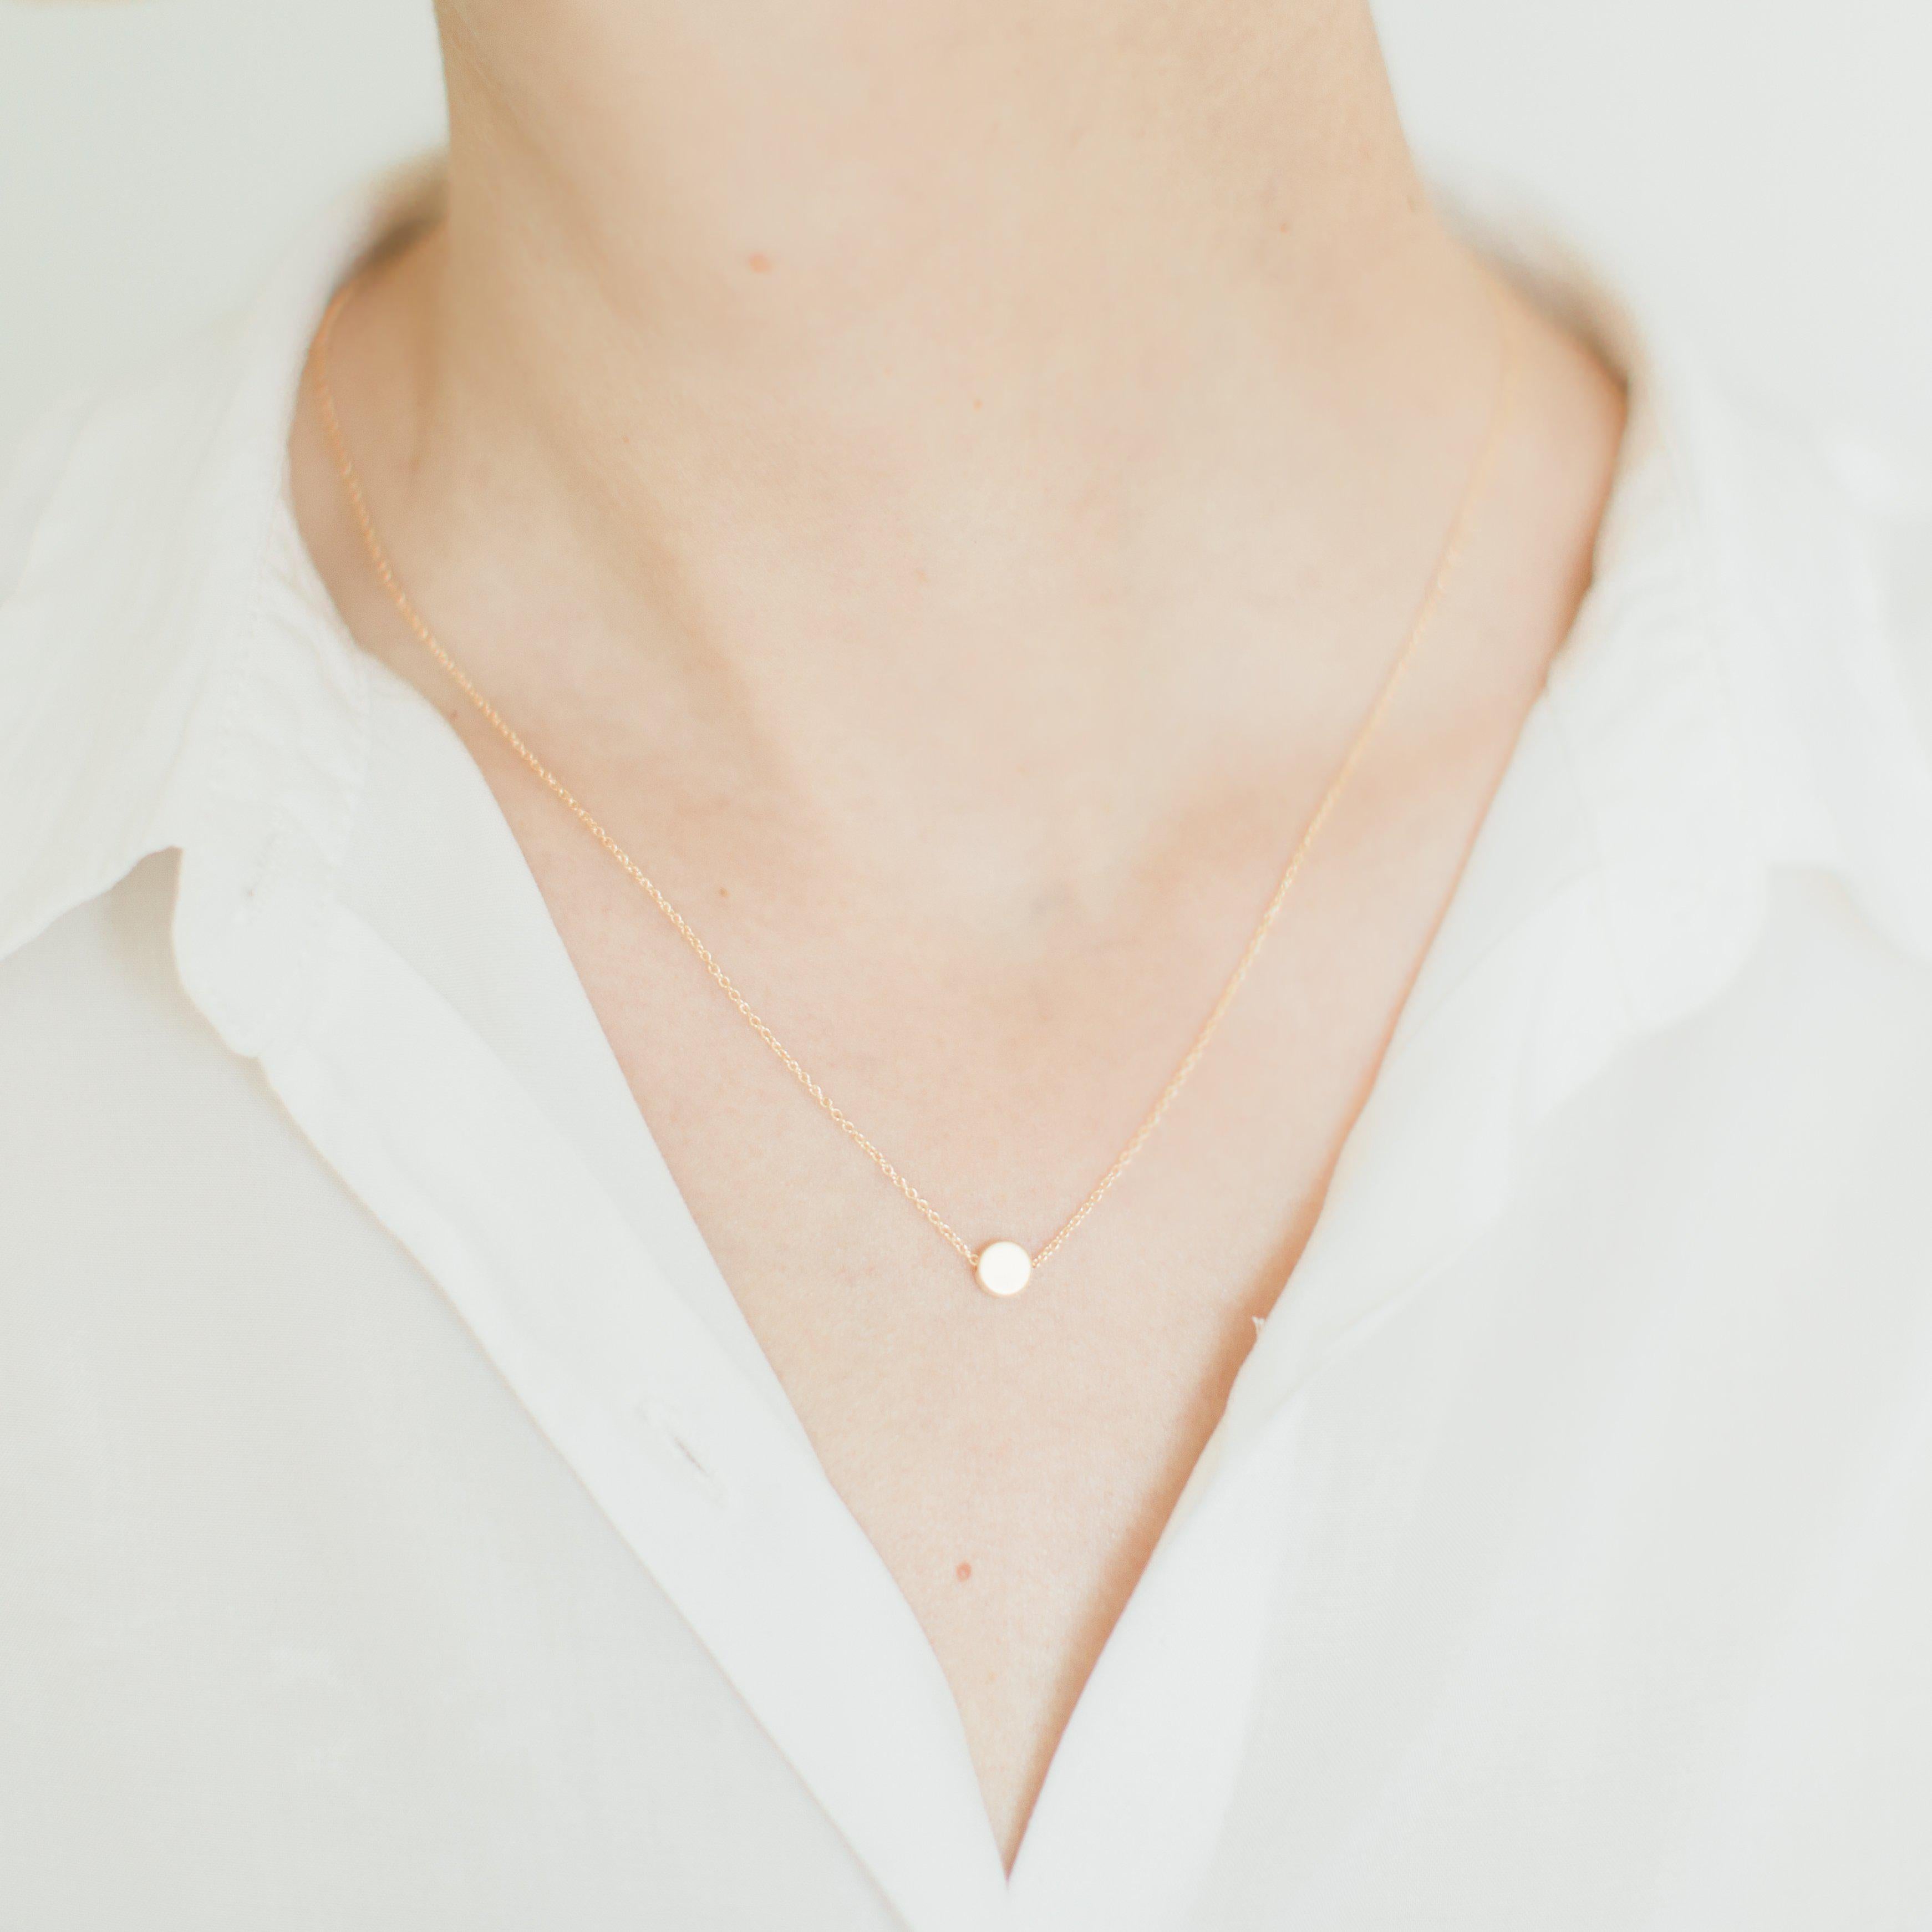 Geometric gold dot necklace